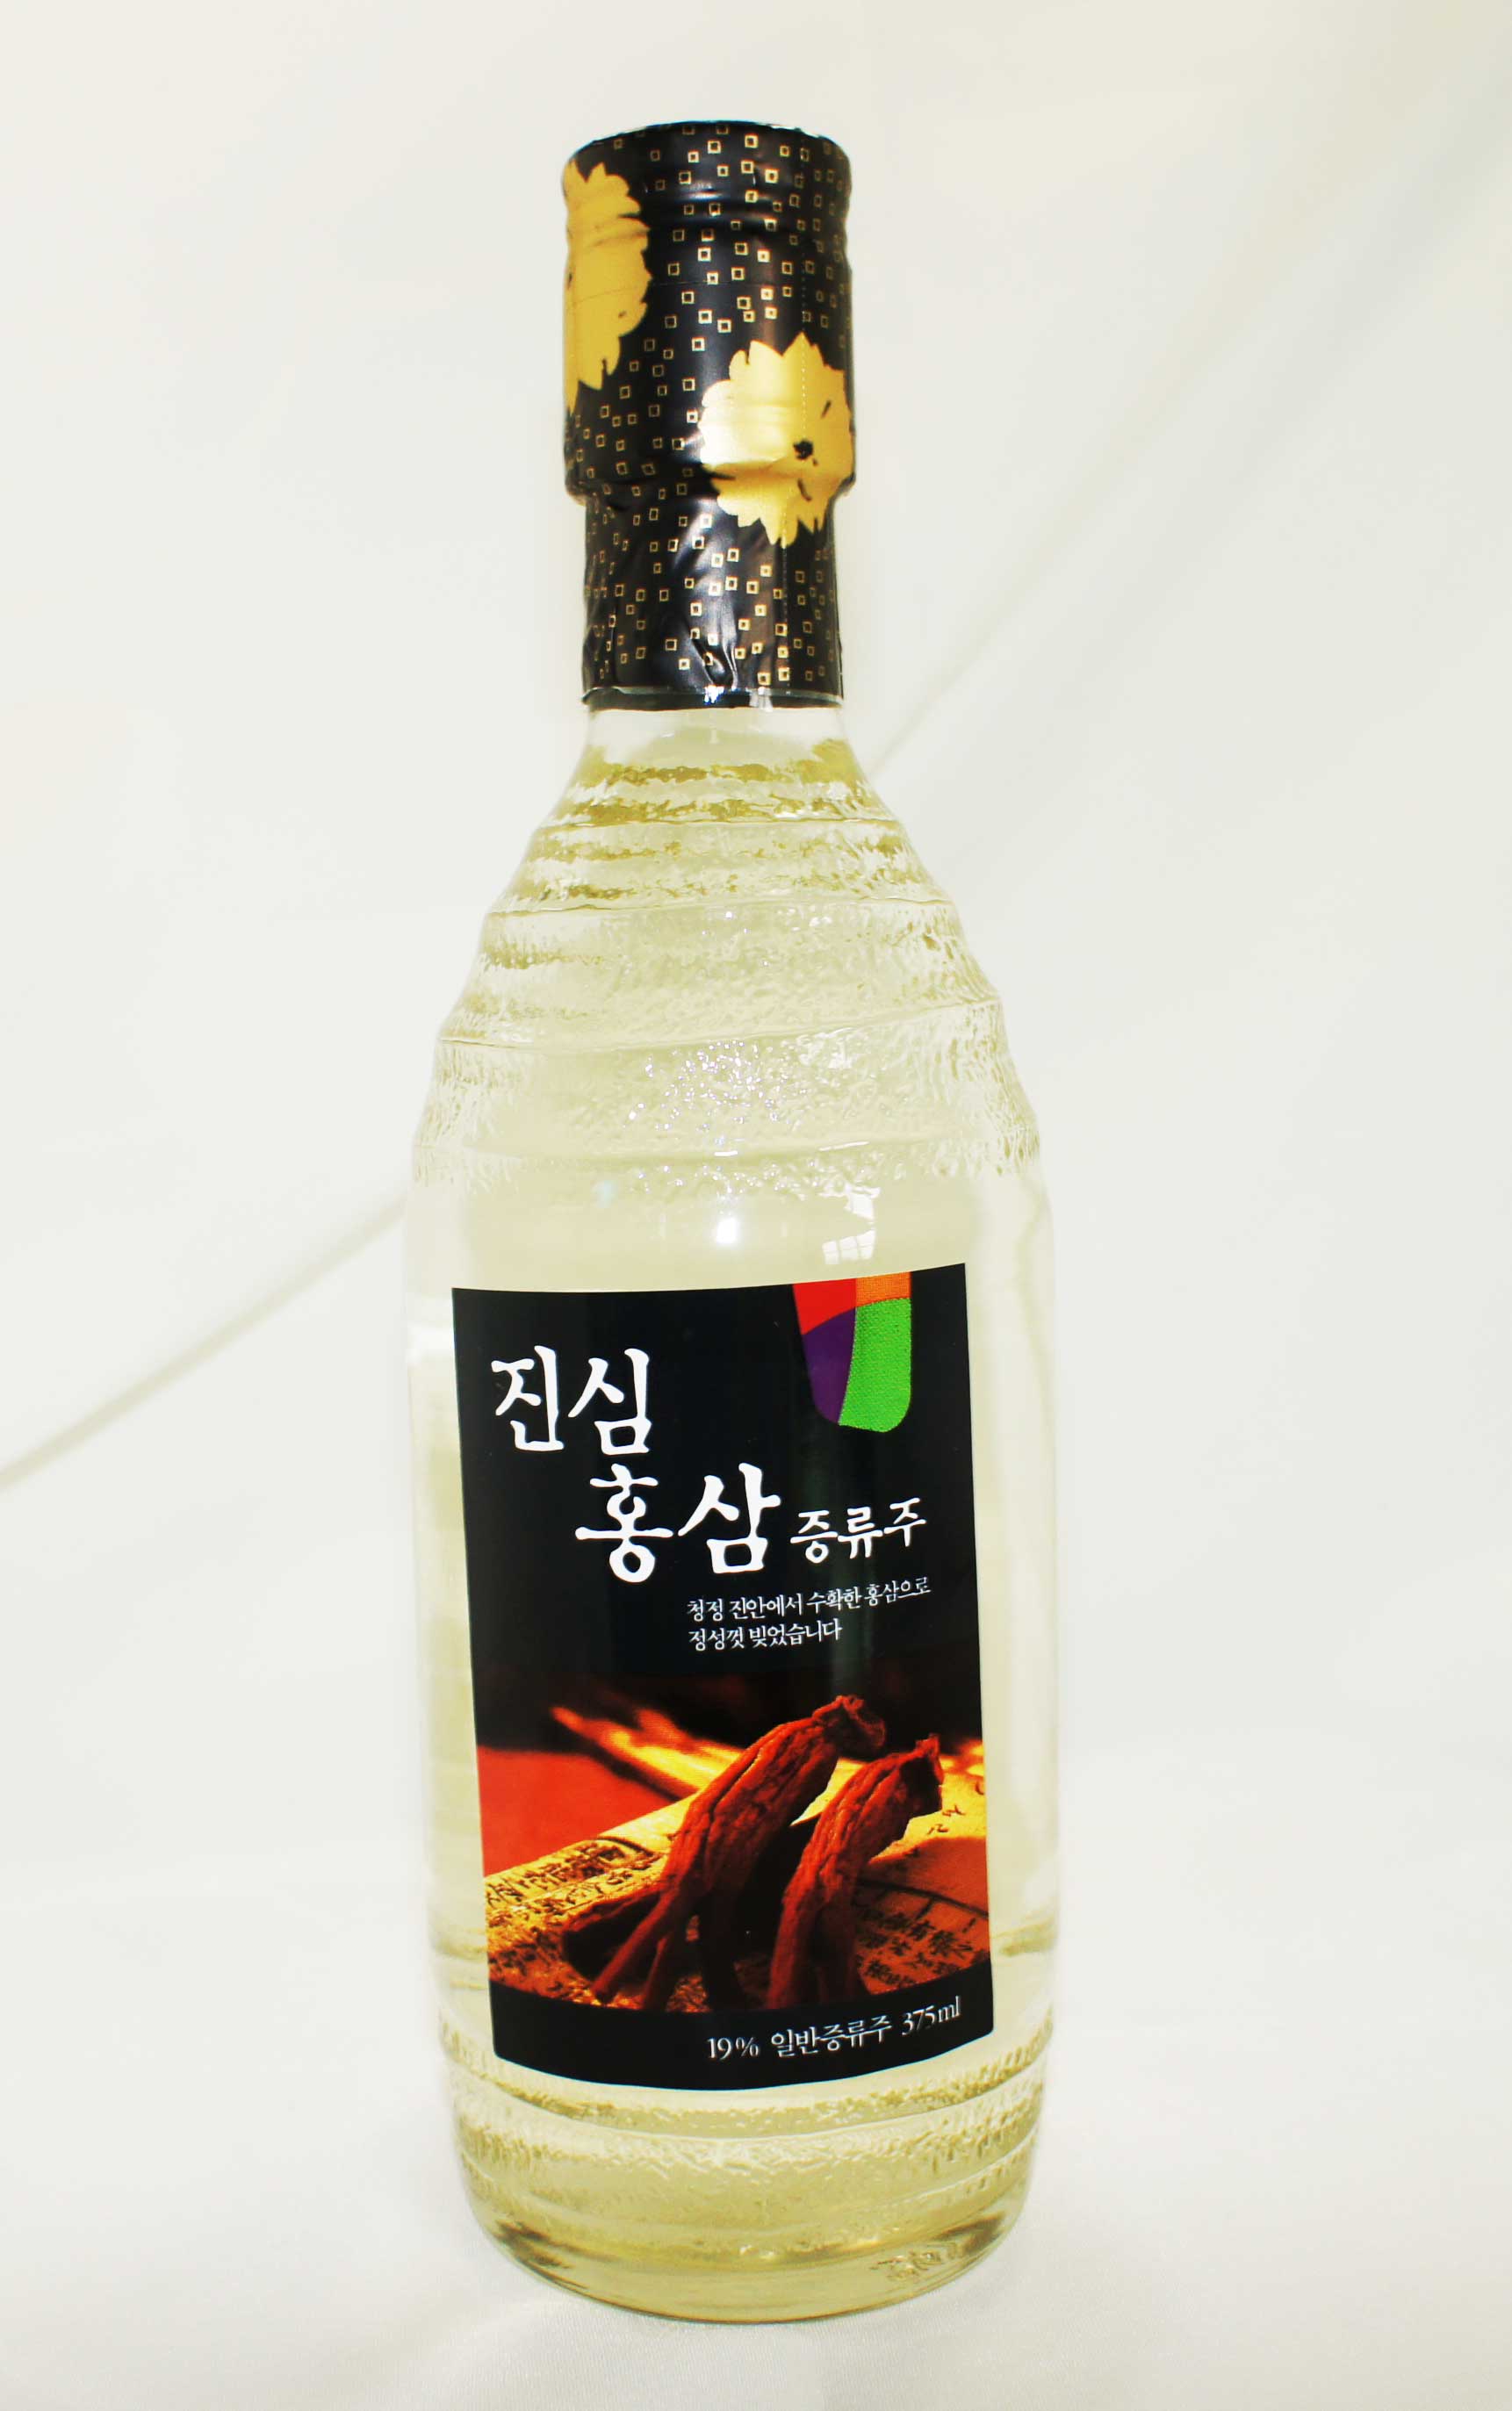 Jinsim Distilled red ginseng liquor Made in Korea